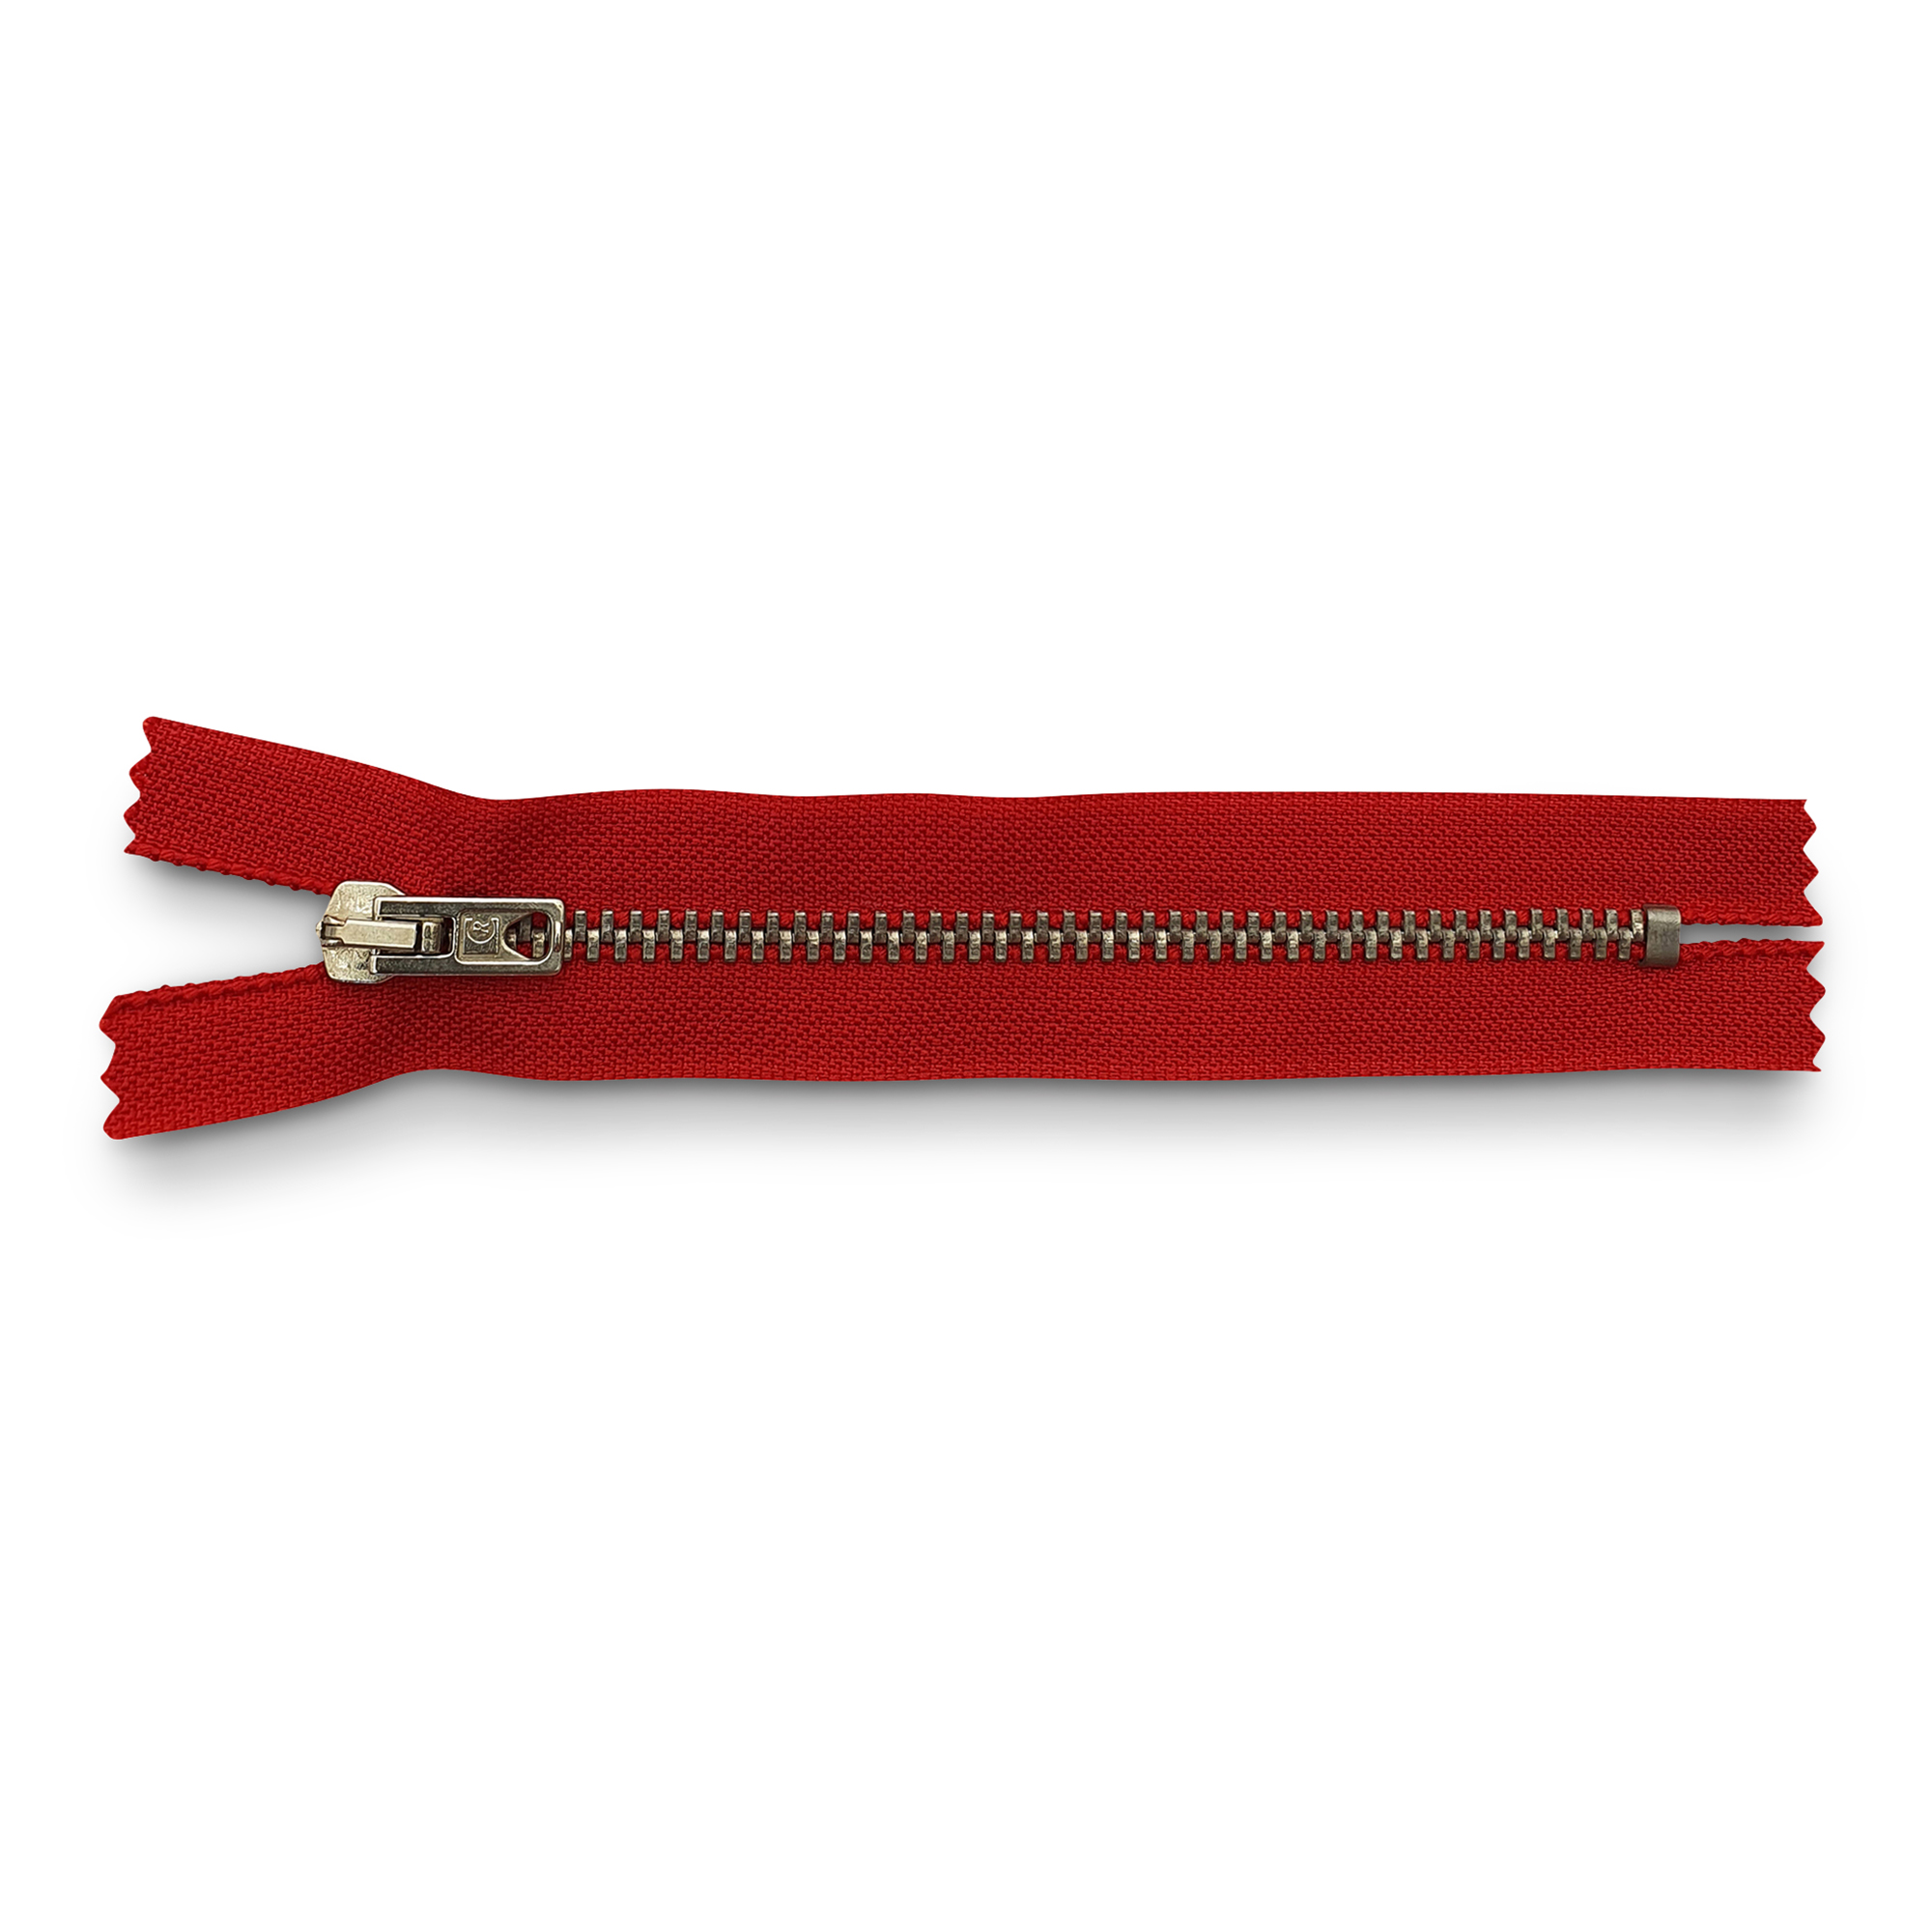 Reißverschluss, nicht teilbar, Metall silberf. schmal, rot, hochwertiger Marken-Reißverschluss von Rubi/Barcelona